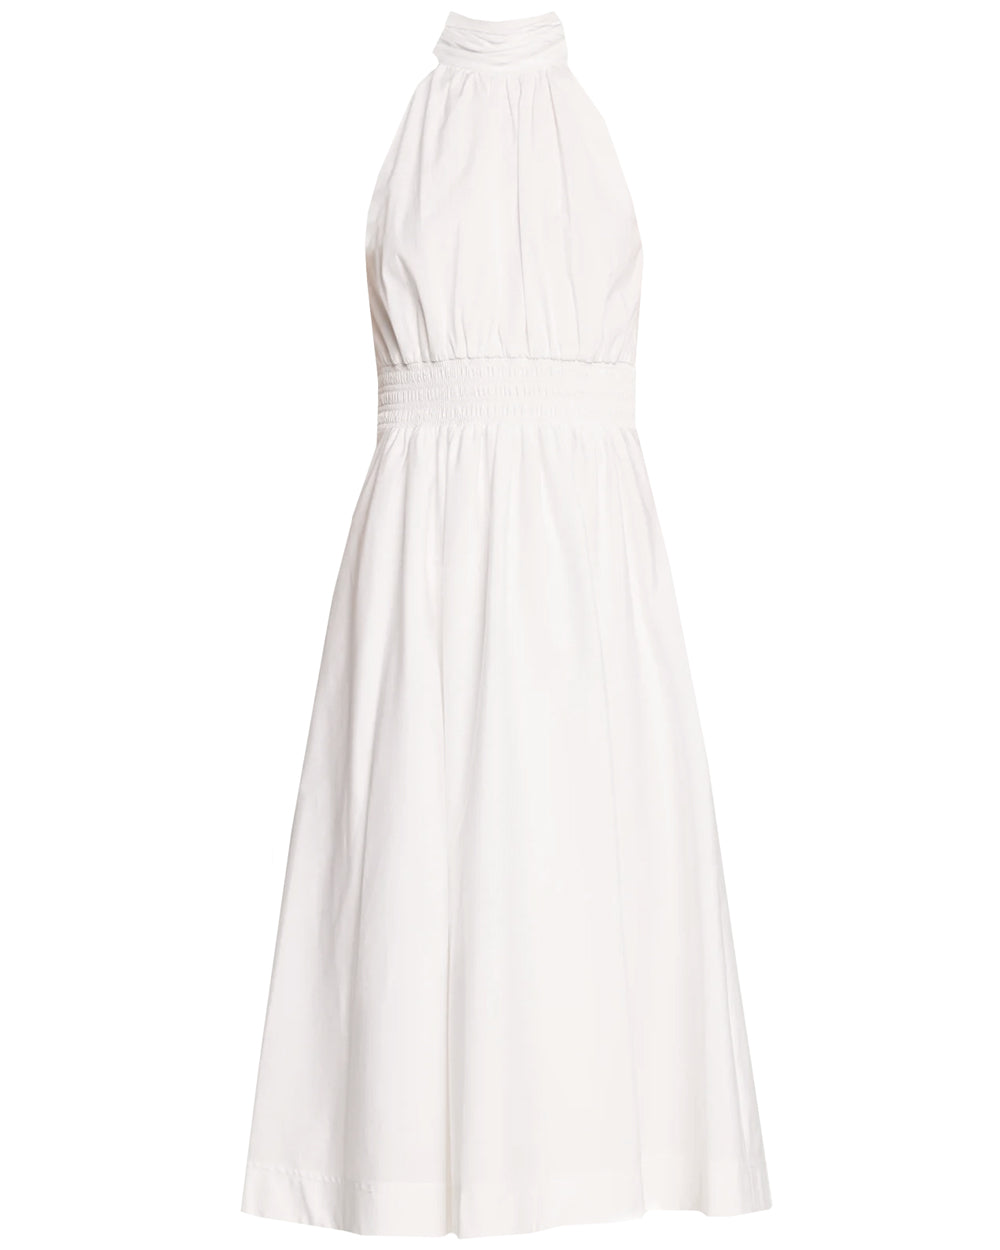 White Kinny Dress